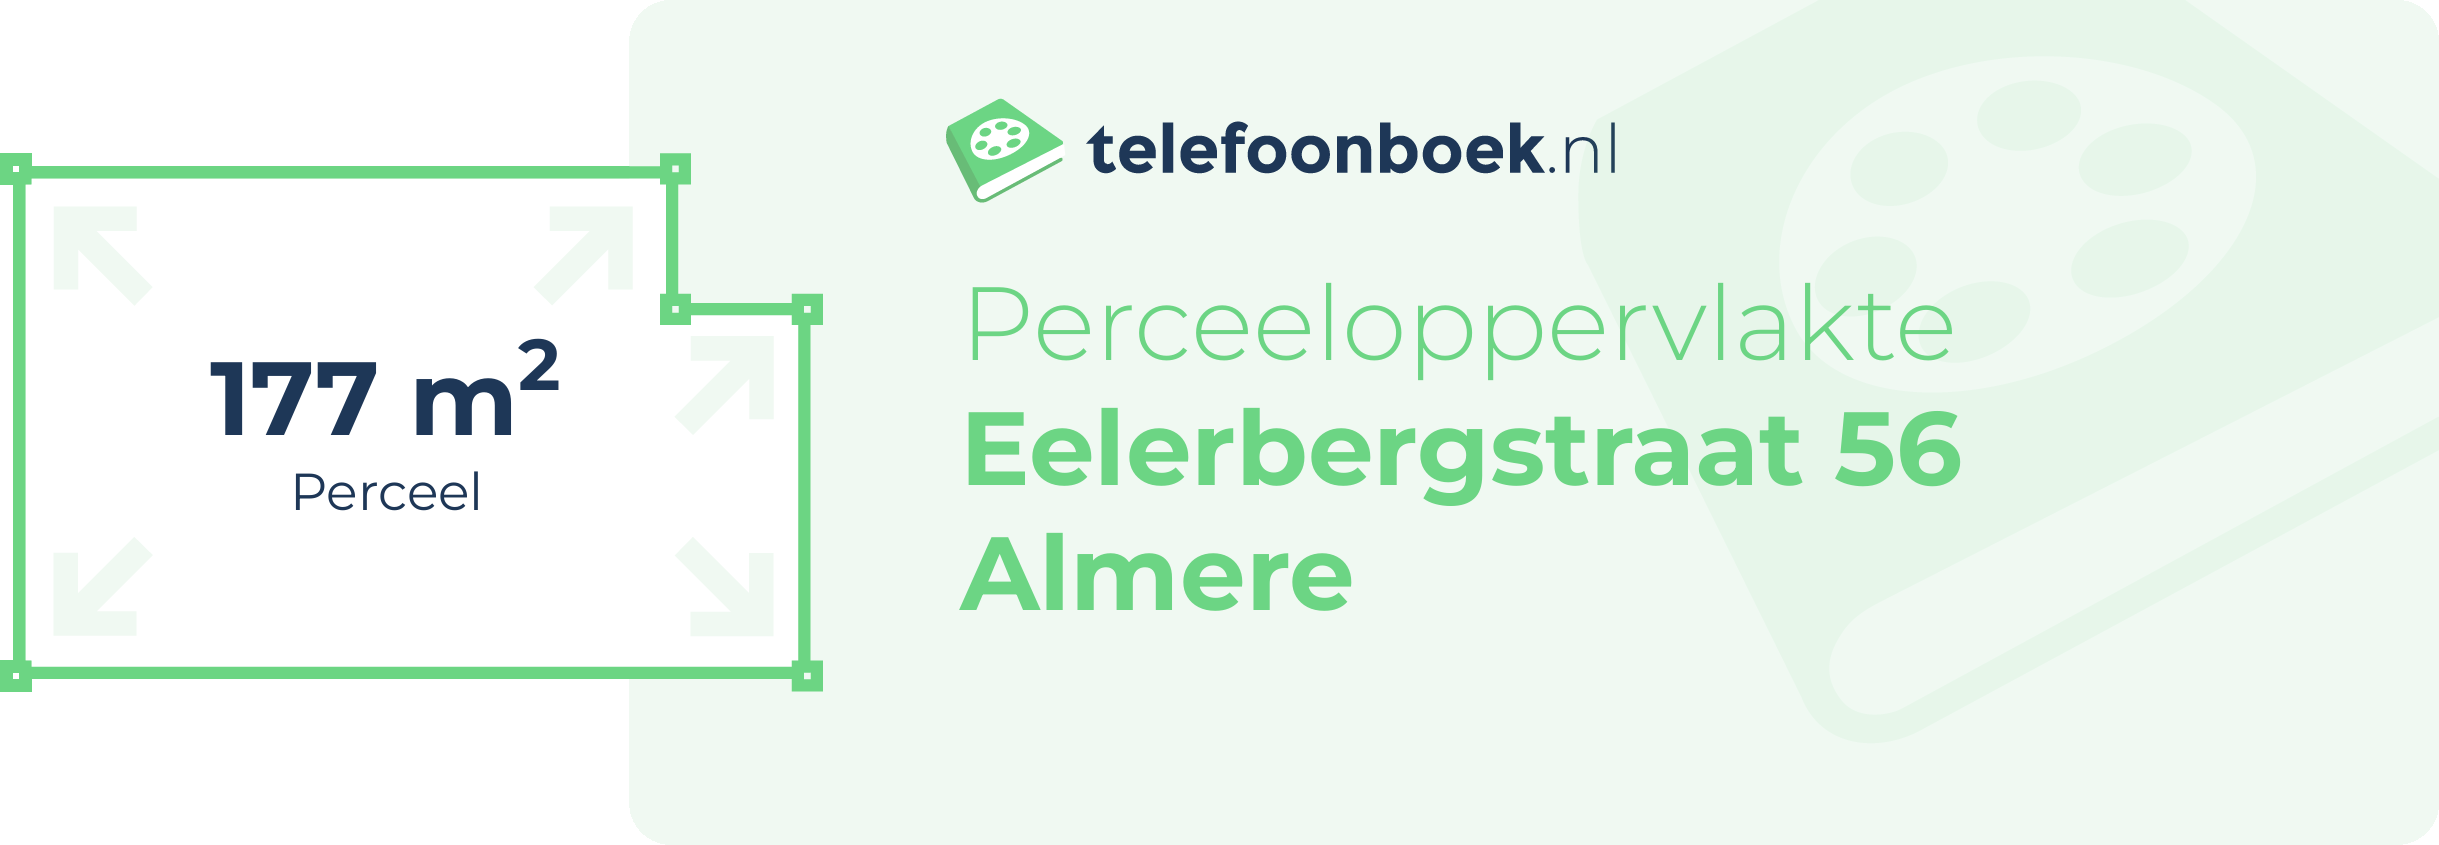 Perceeloppervlakte Eelerbergstraat 56 Almere